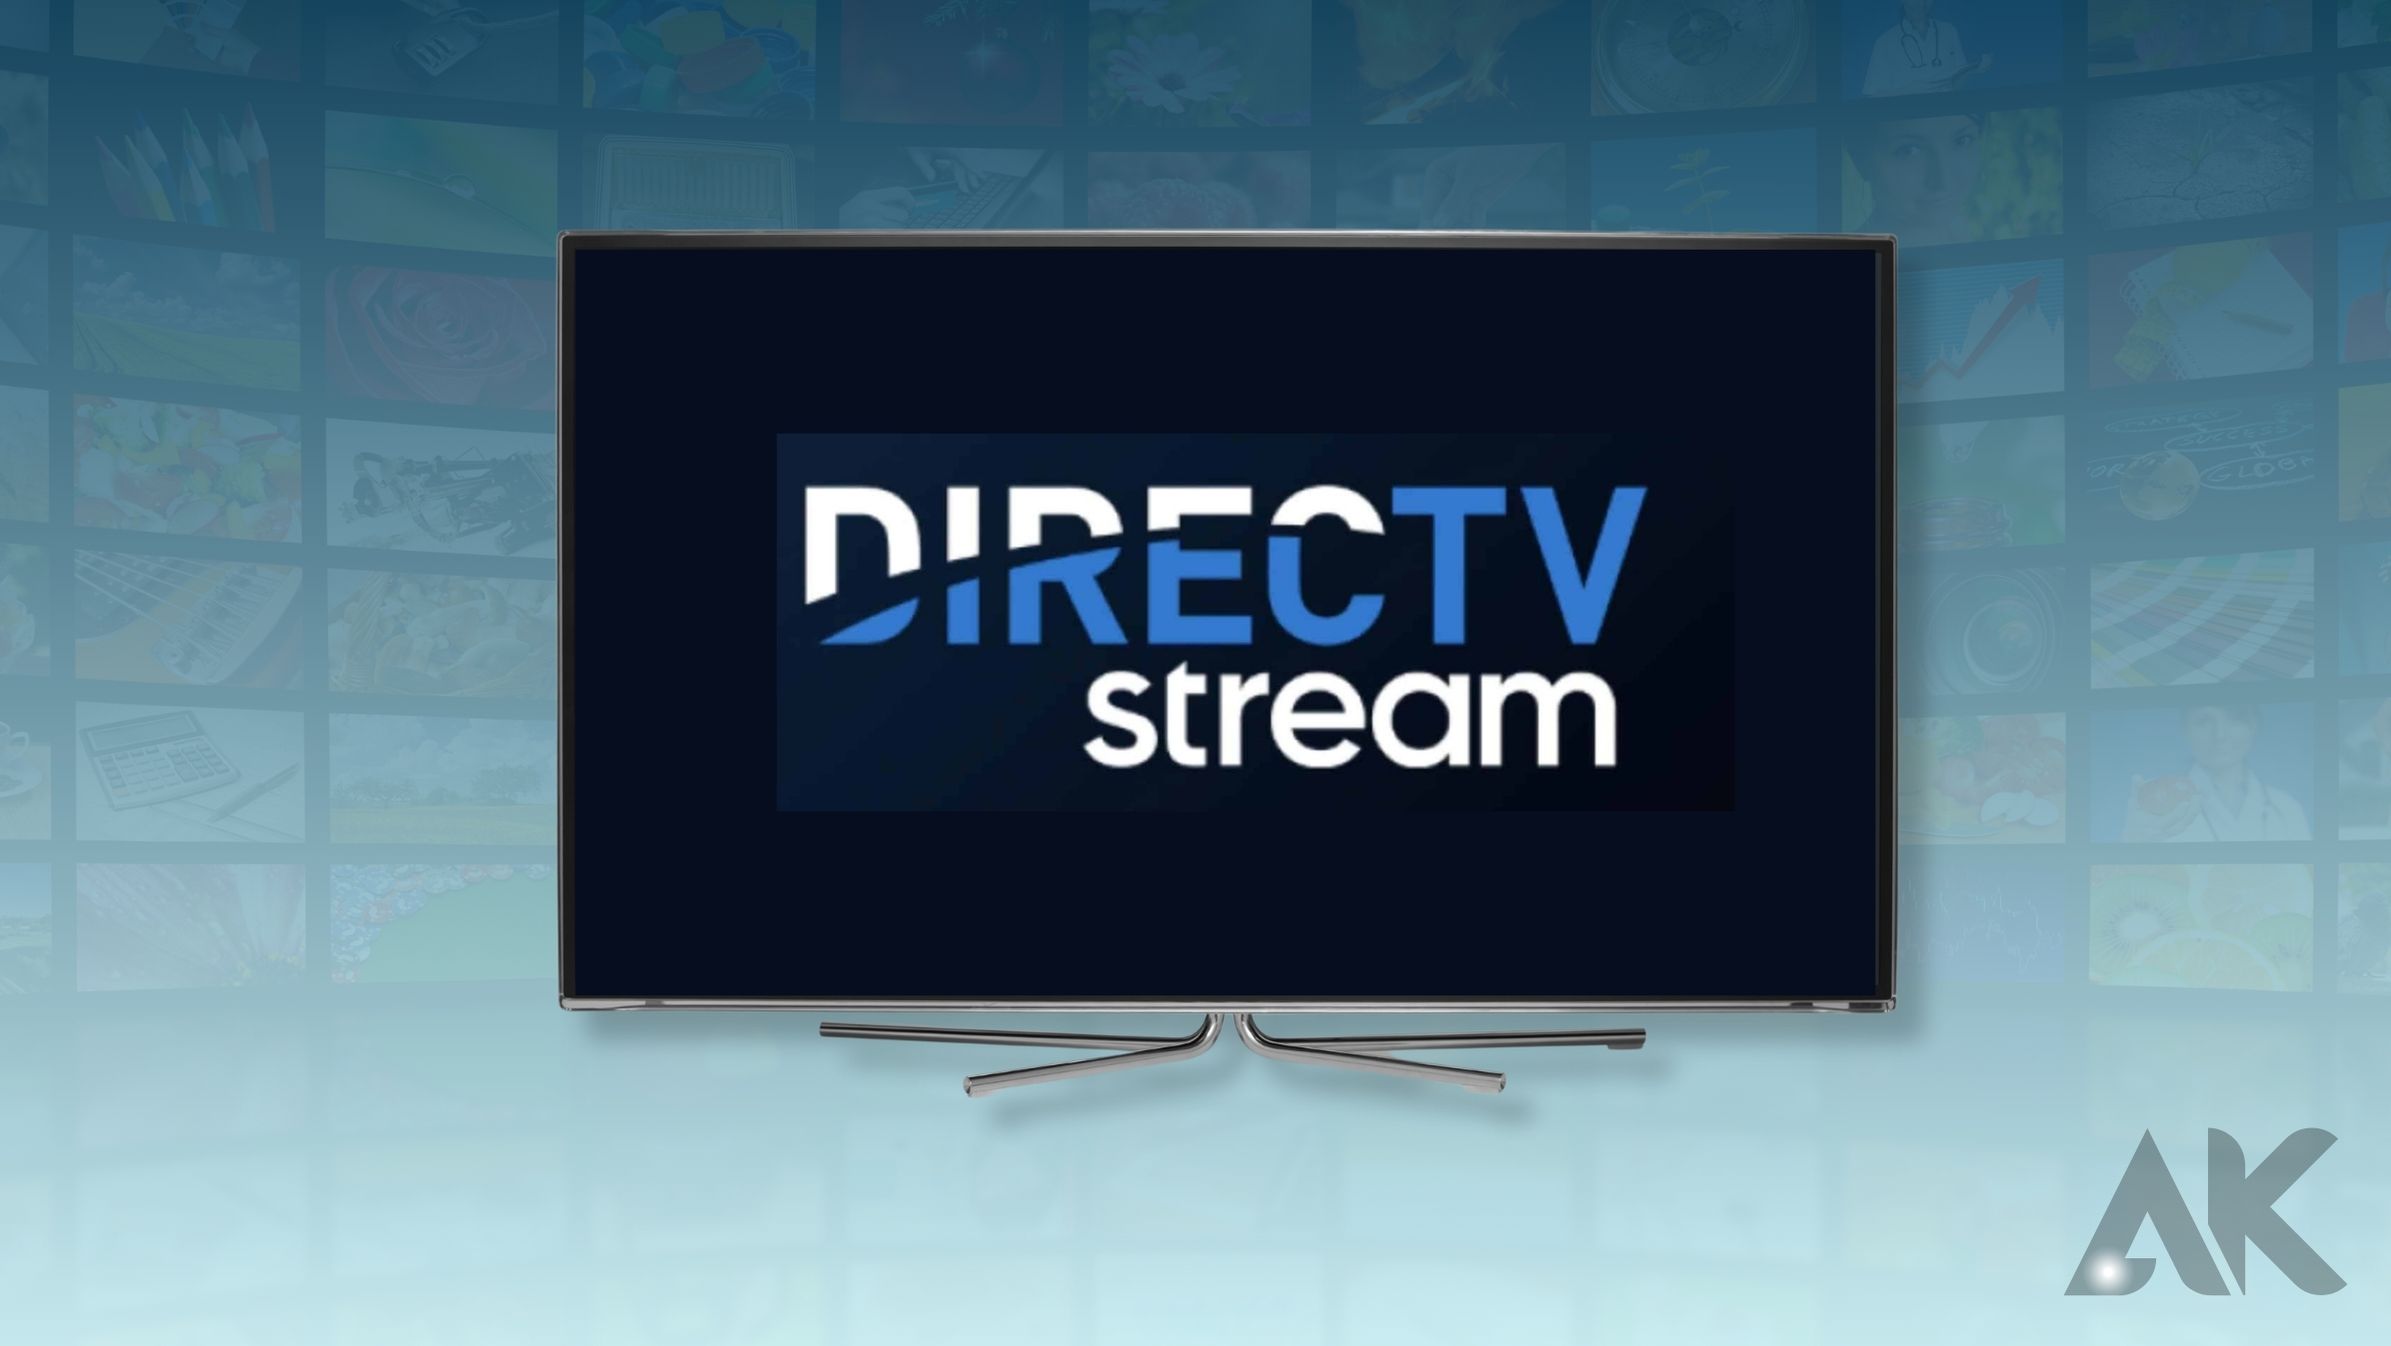 Direct TV Stream